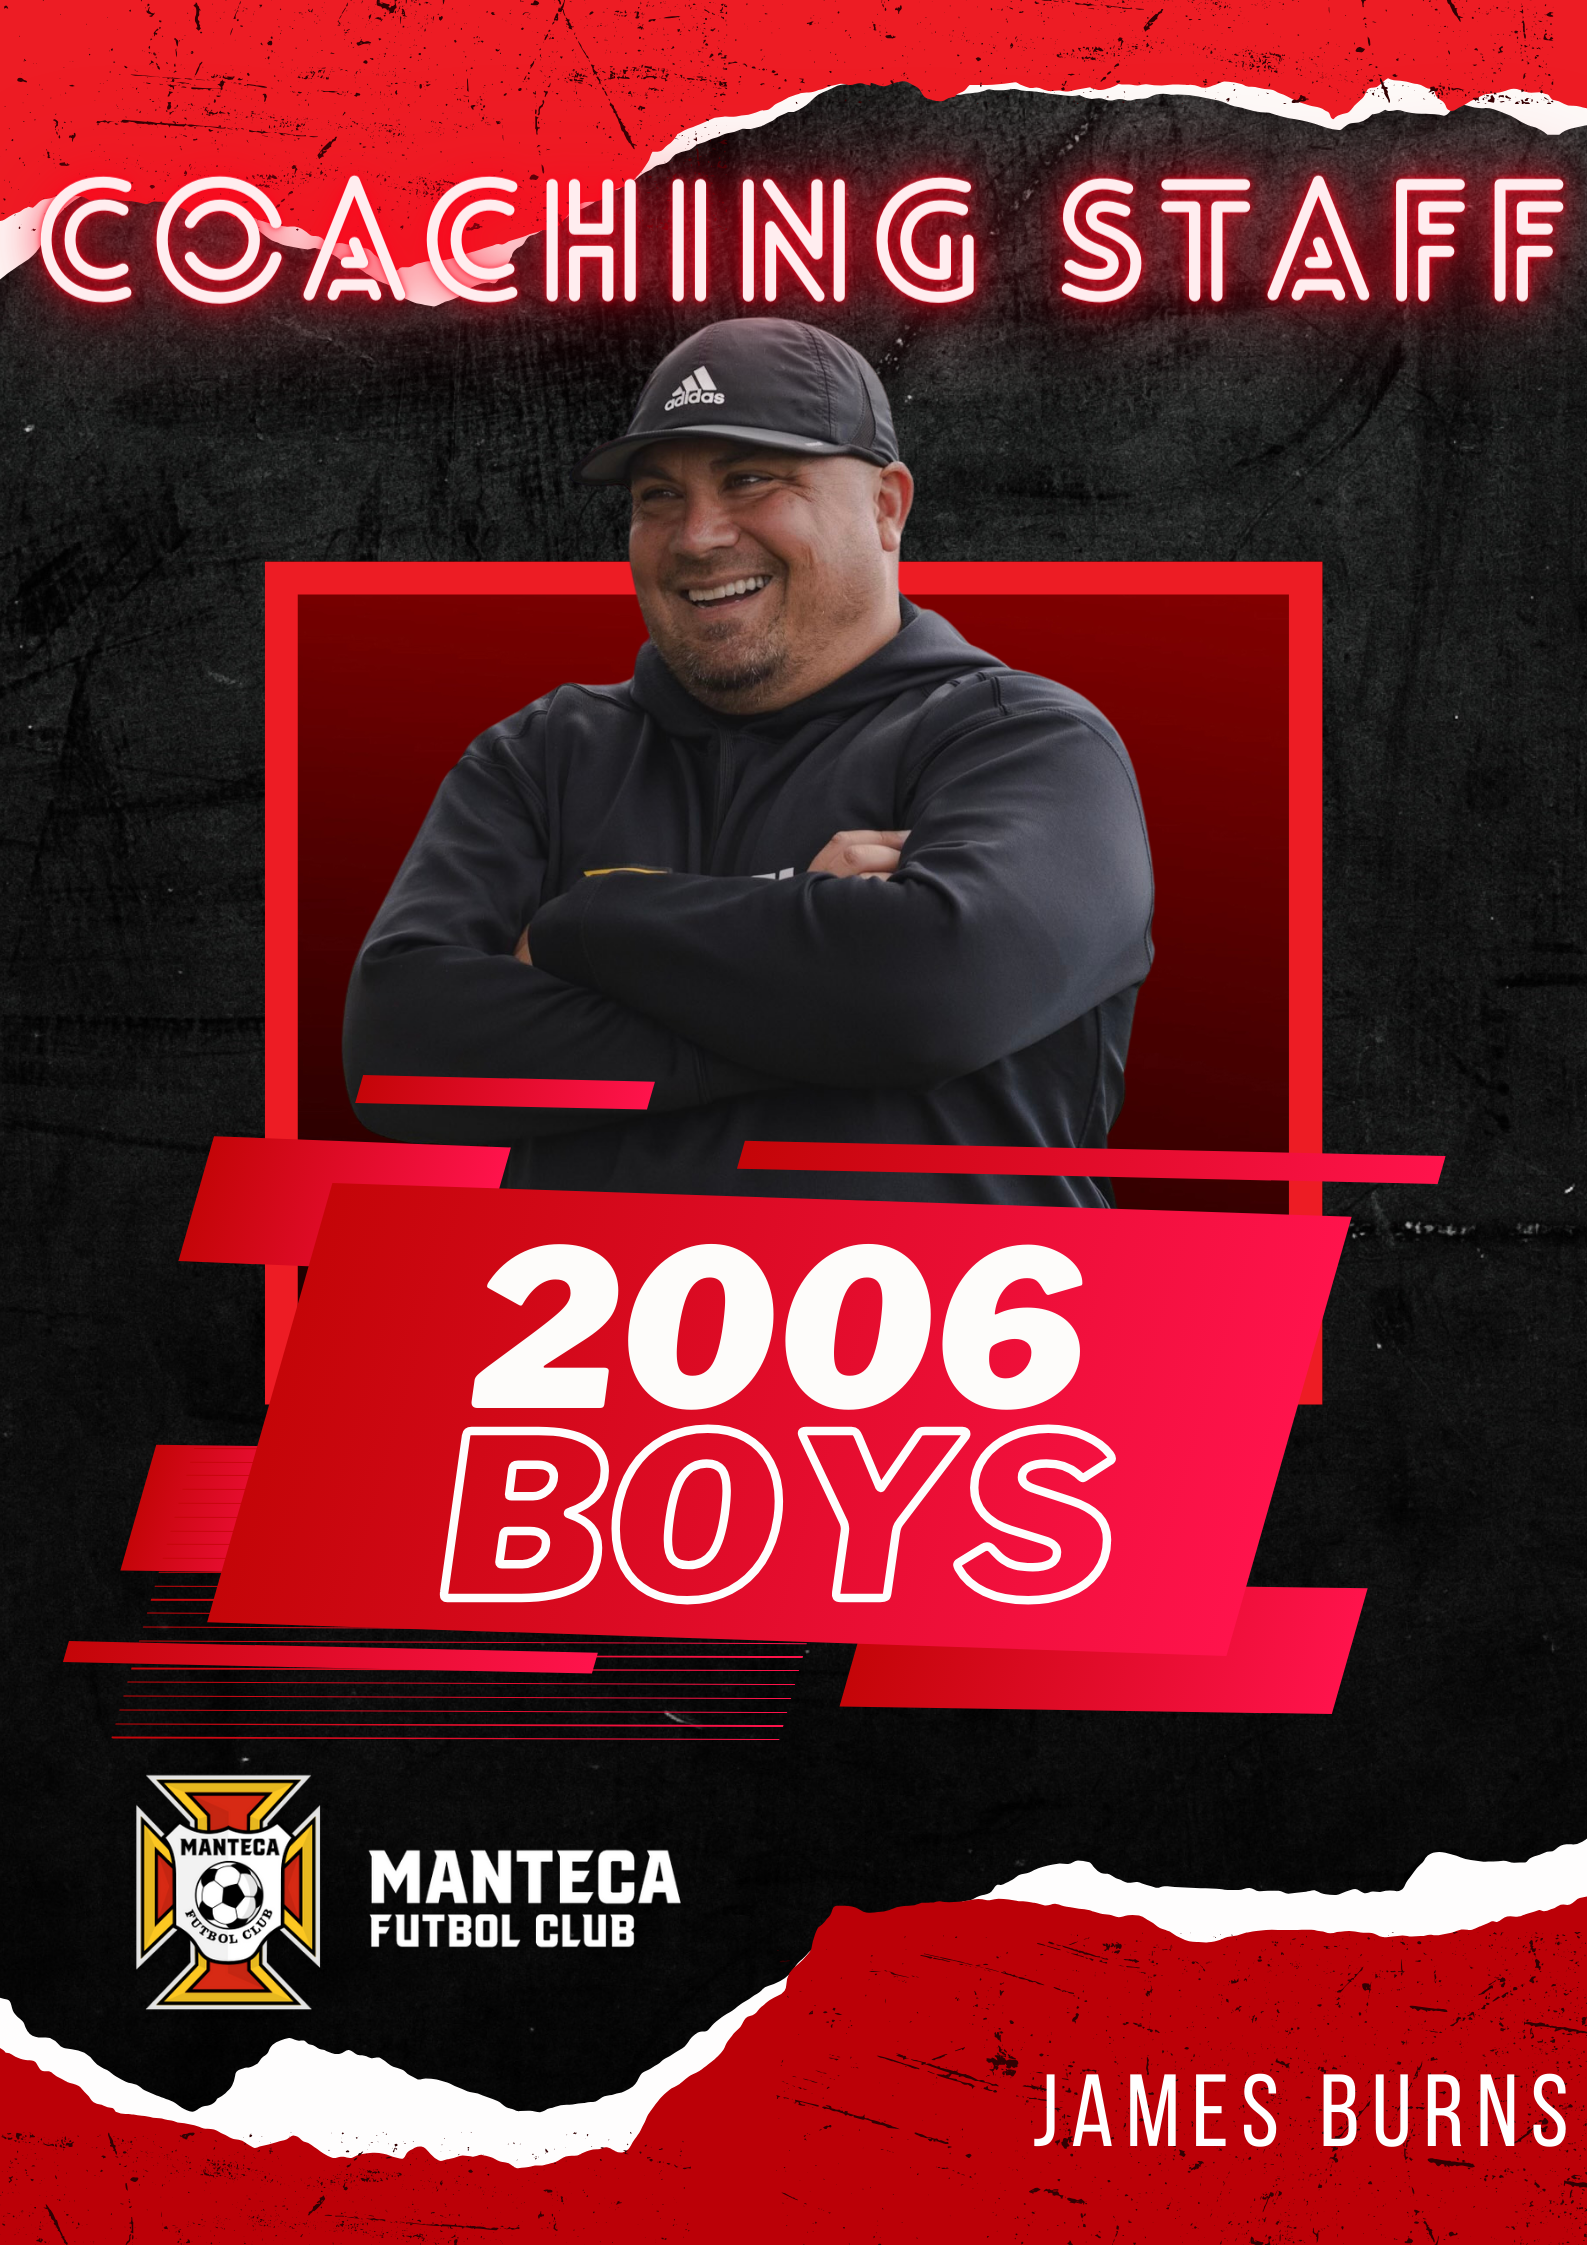 Manteca Futbol Club 06 Boys Rebels Red